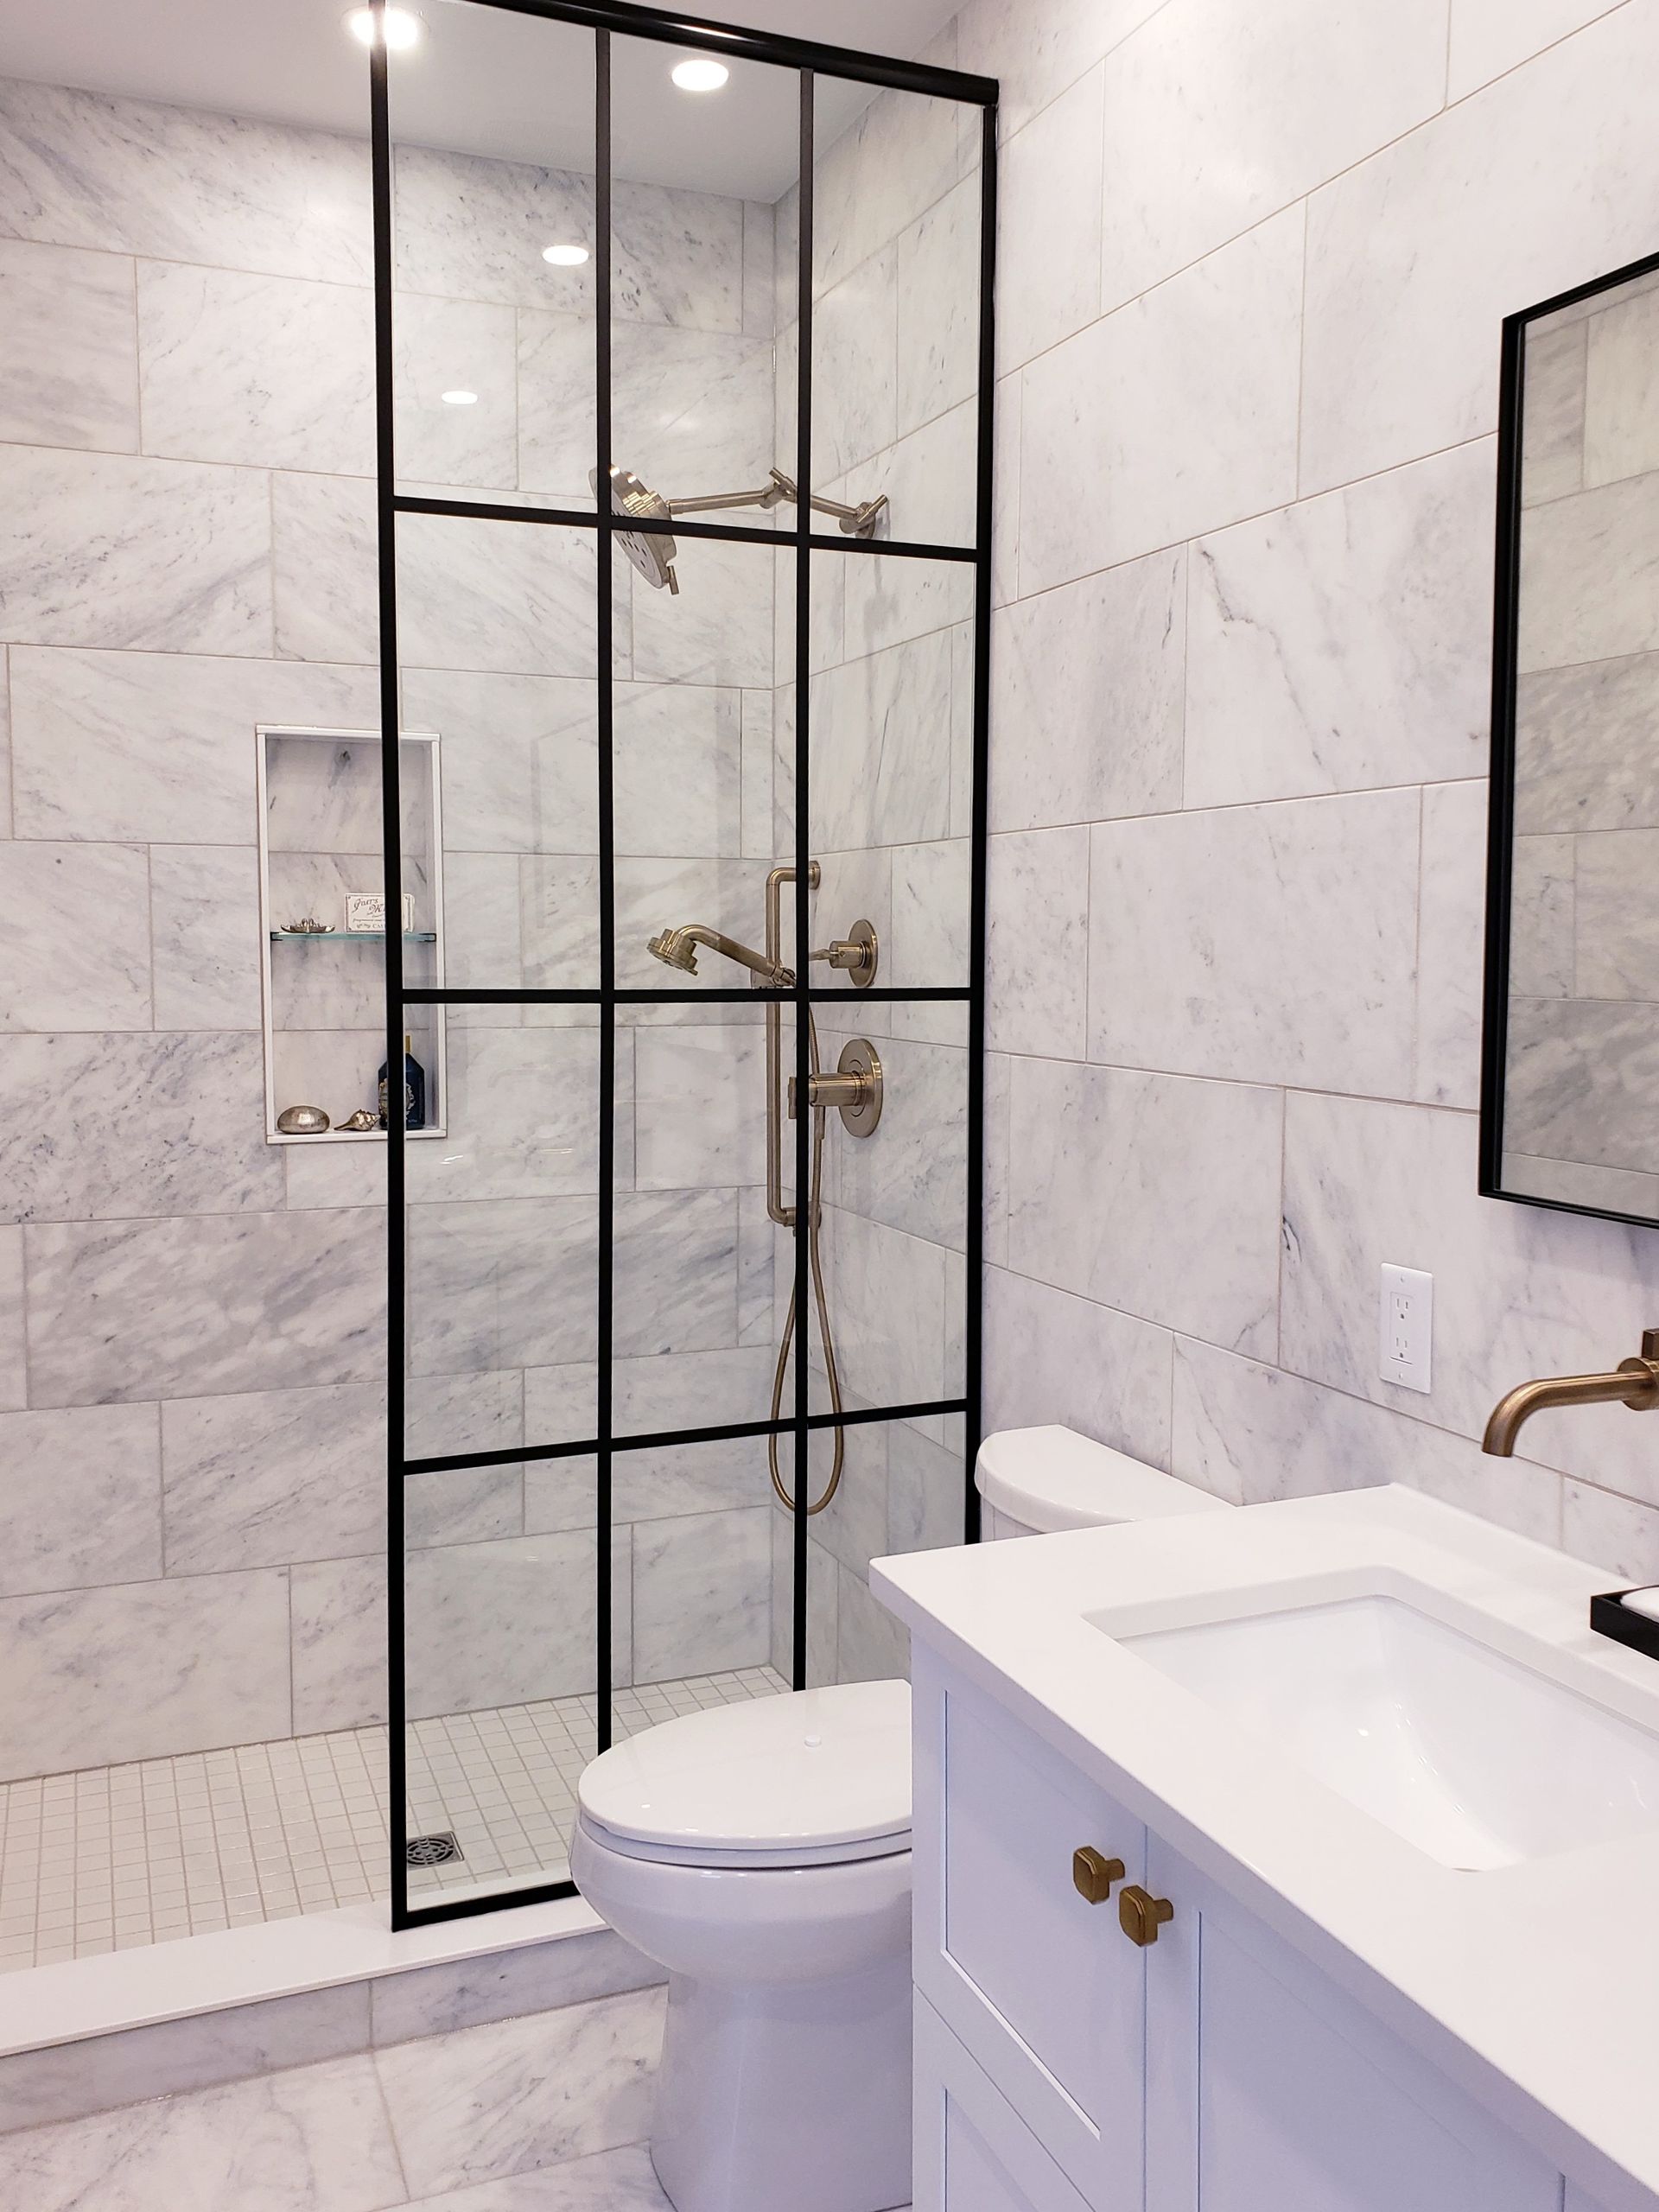 home improvement glass shower tiled wall bathroom